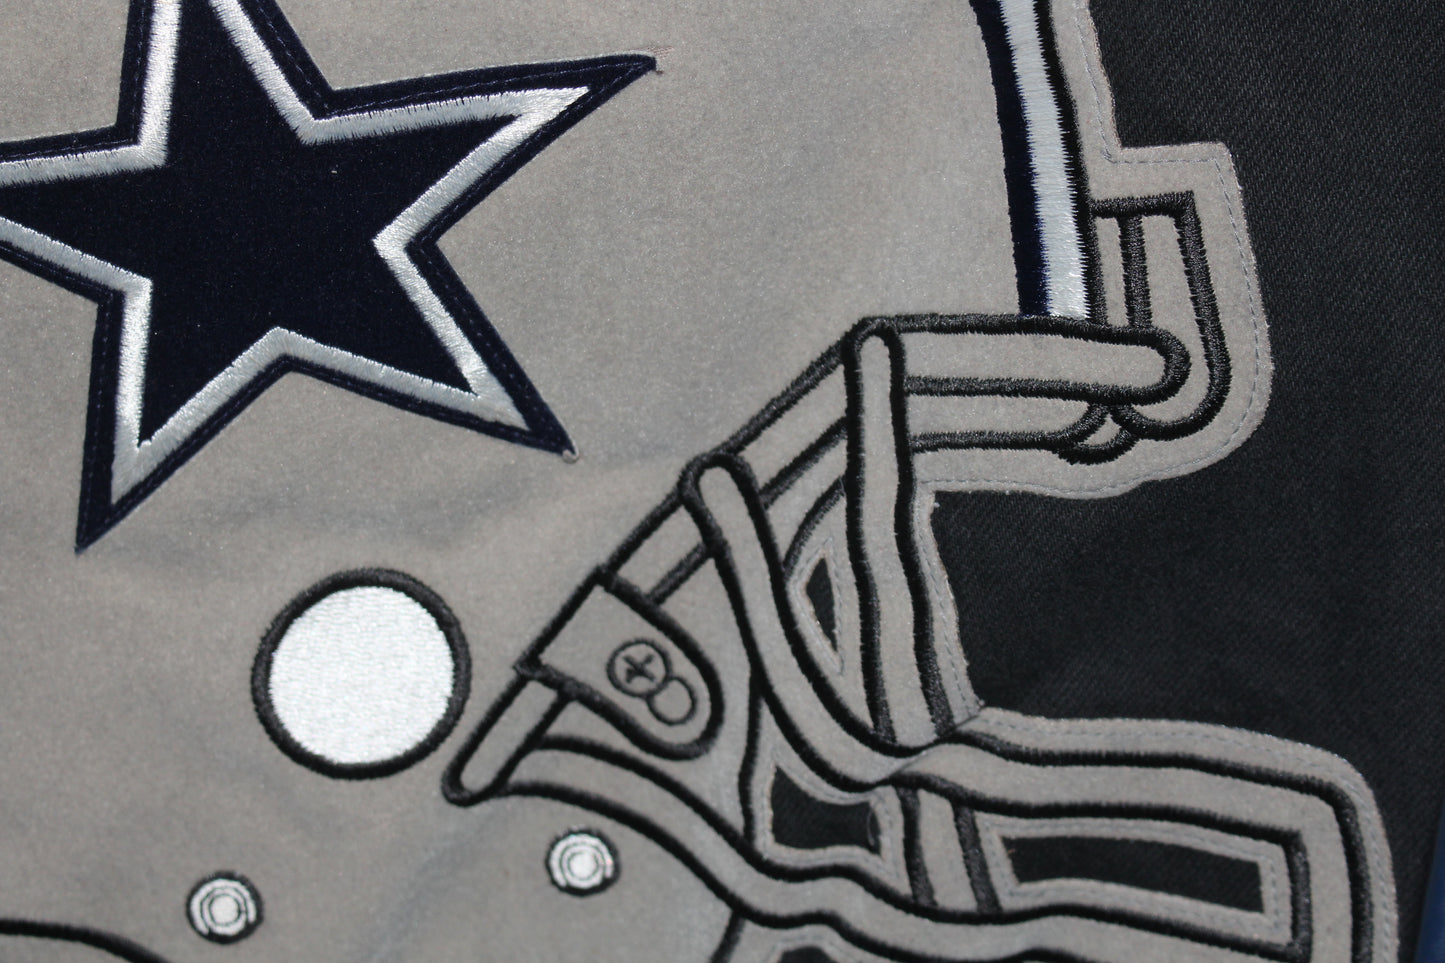 Rare Dallas Cowboys Denim Leather Jeff Hamilton Jacket (L)